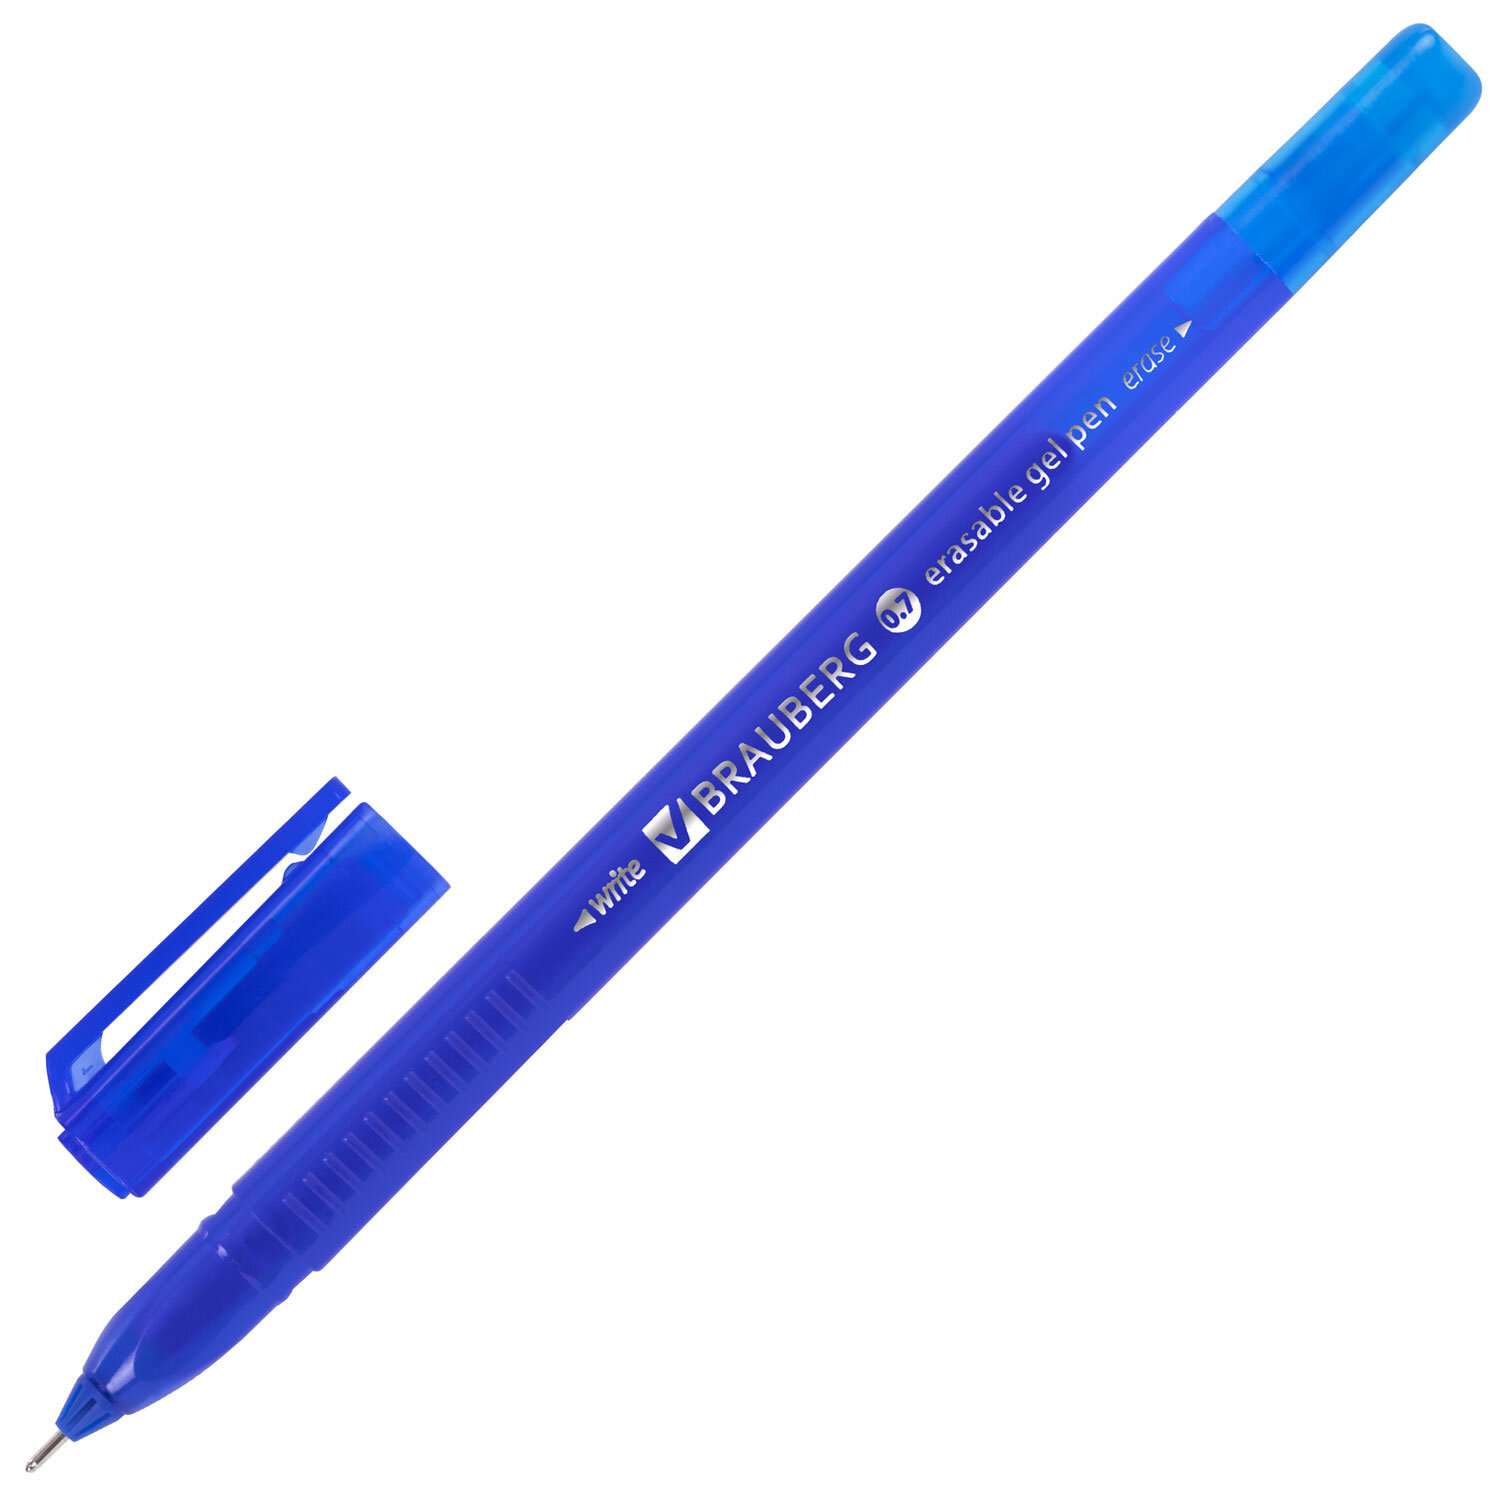 Ручки гелевые Brauberg пиши стирай набор 12 штук синие - фото 1